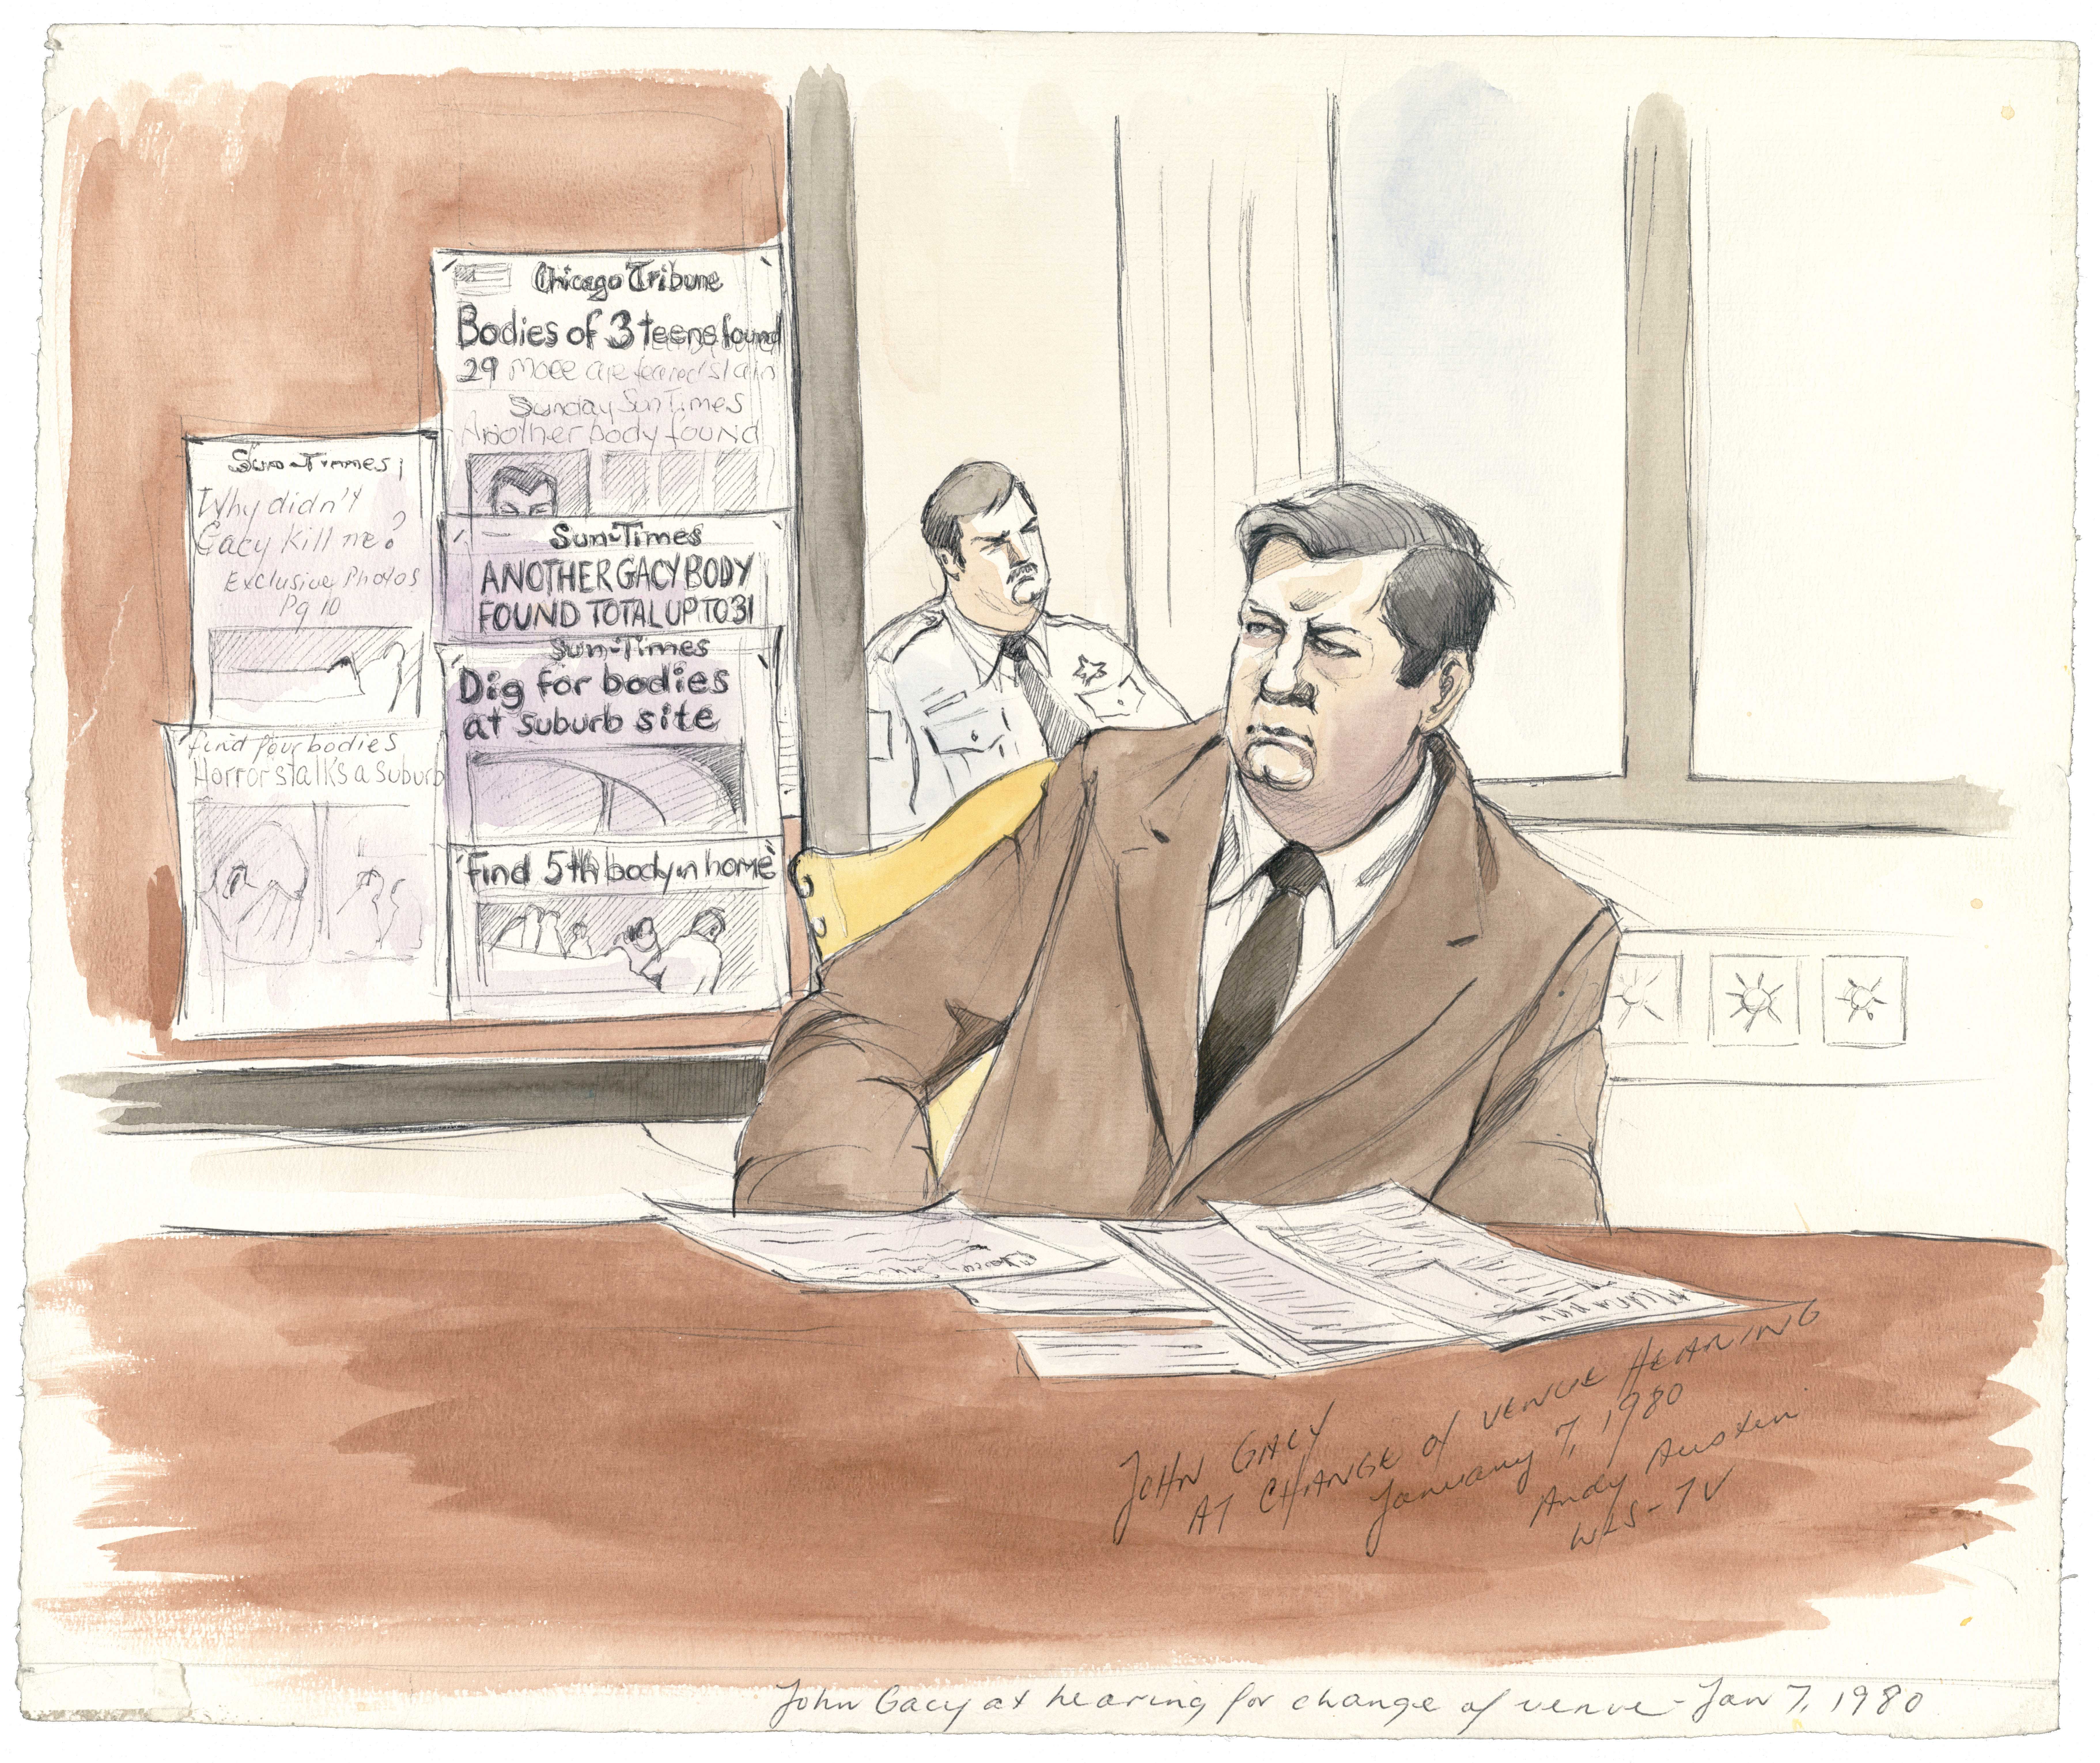 John Wayne Gacy Trial, 1980